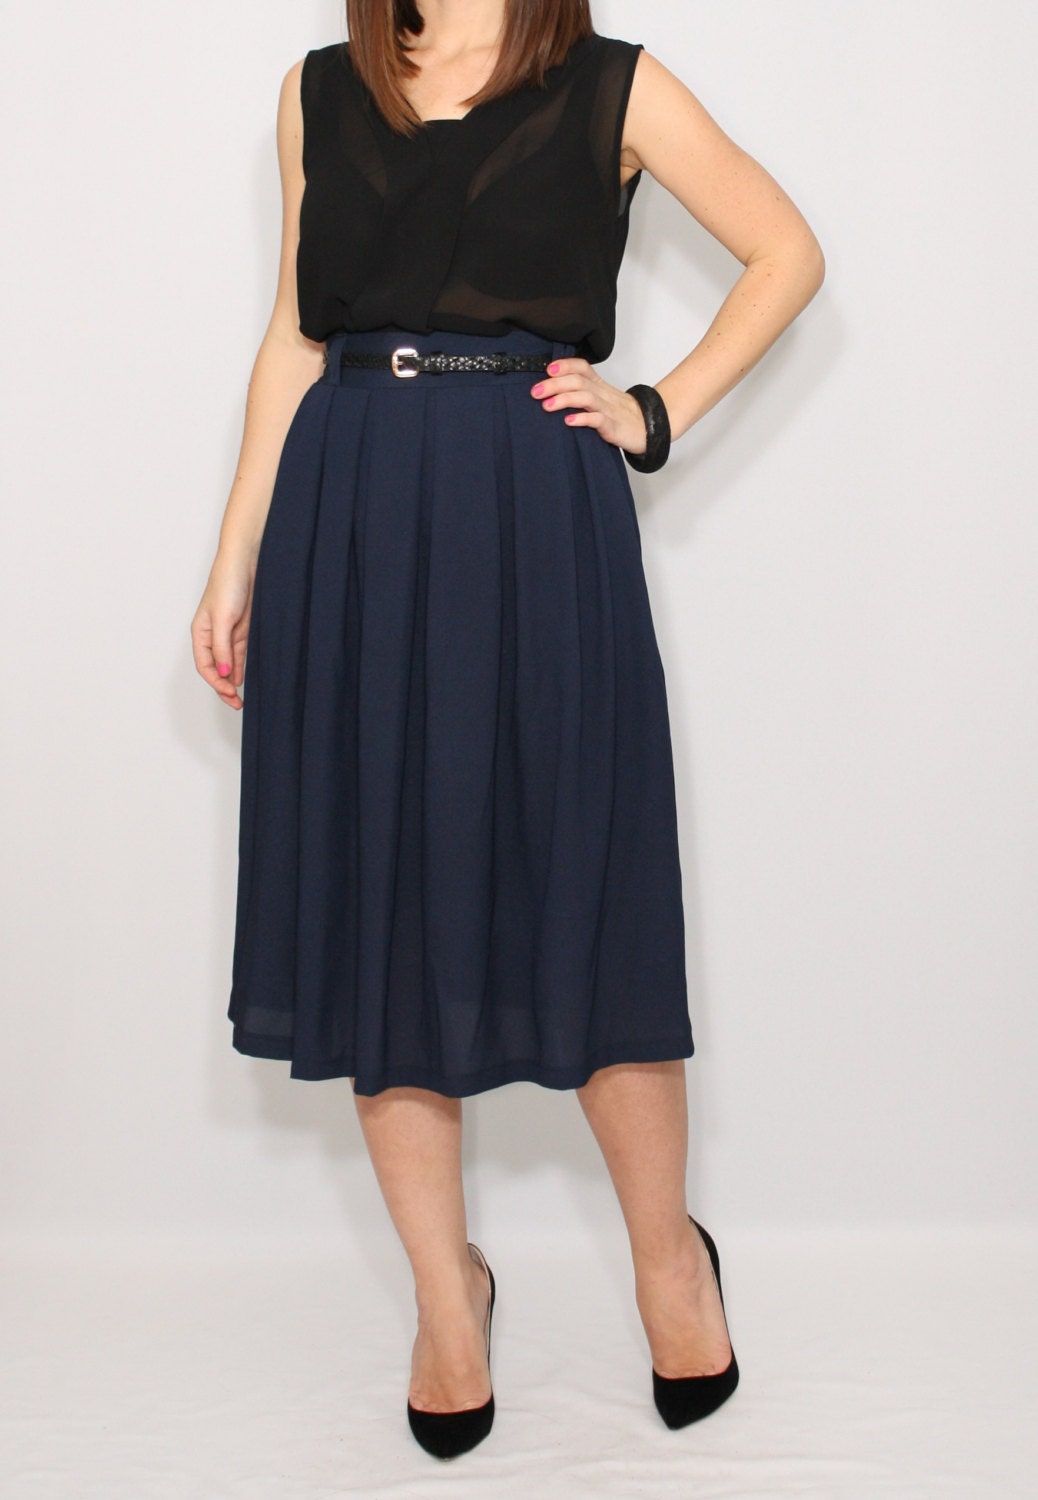 Navy Blue Chiffon Midi Skirt With Pockets, A Line Skirt, Pleated